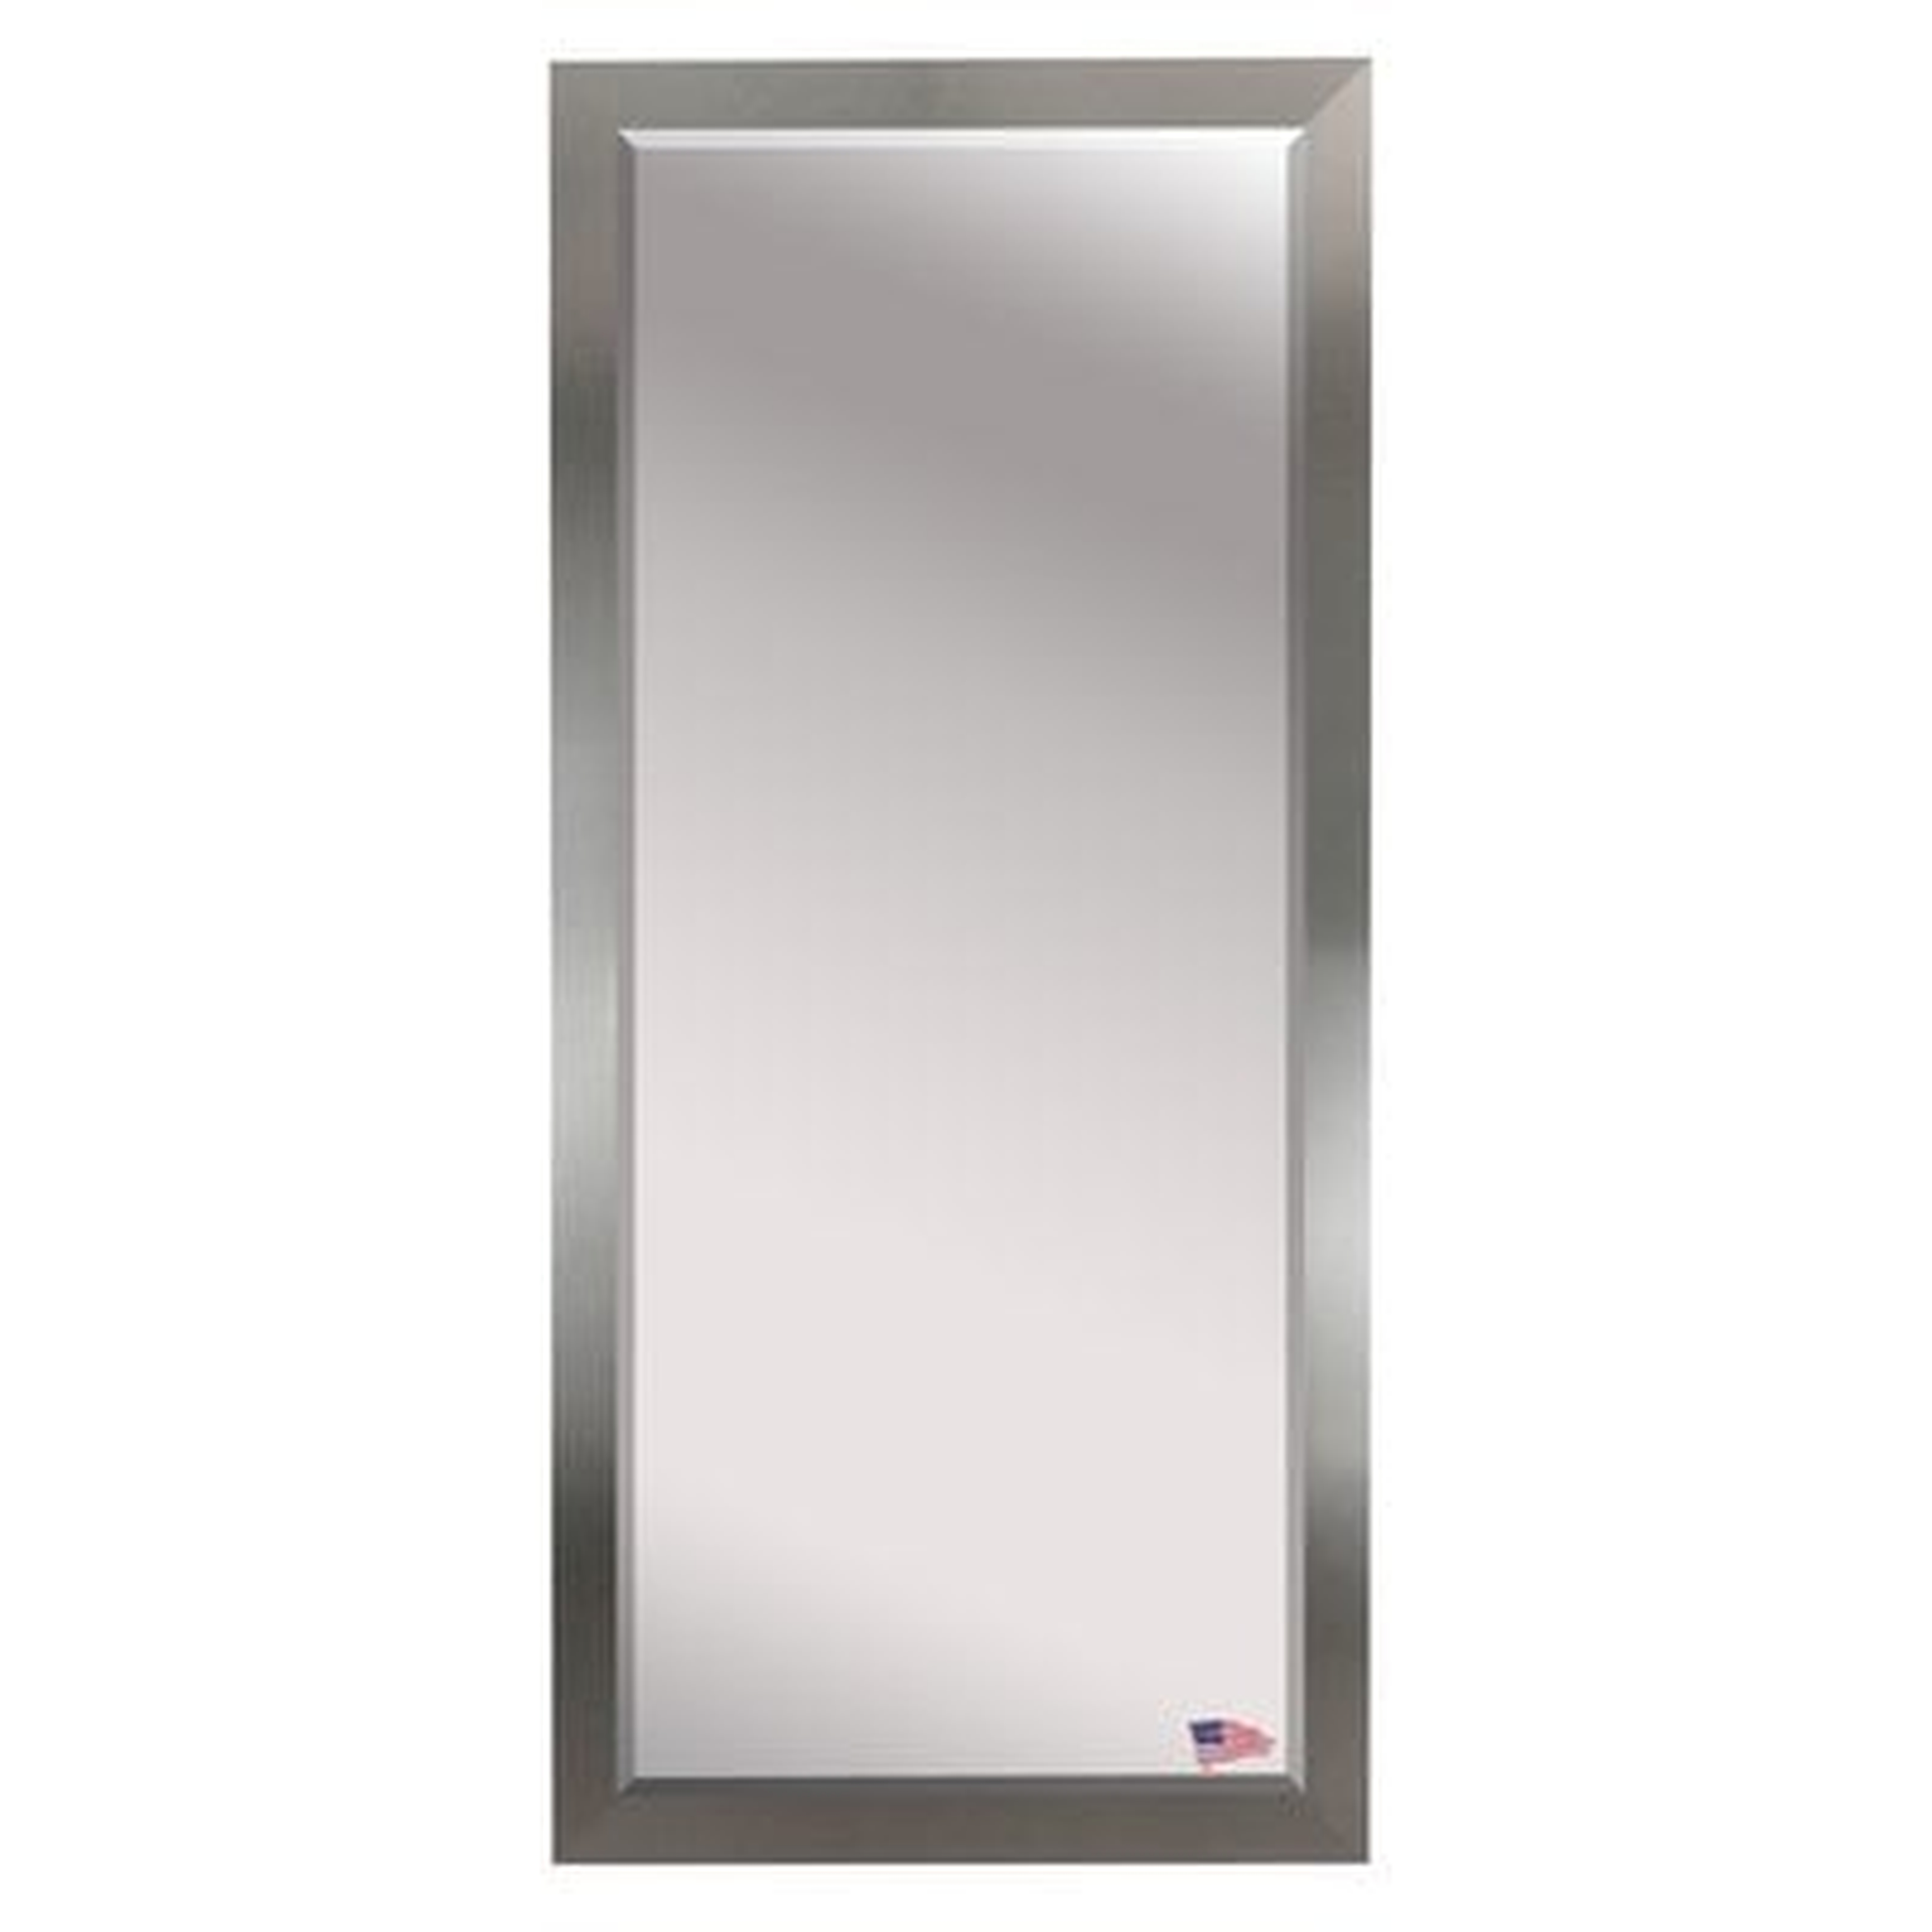 Beveled Brushed Nickel Wall Mirror - Wayfair